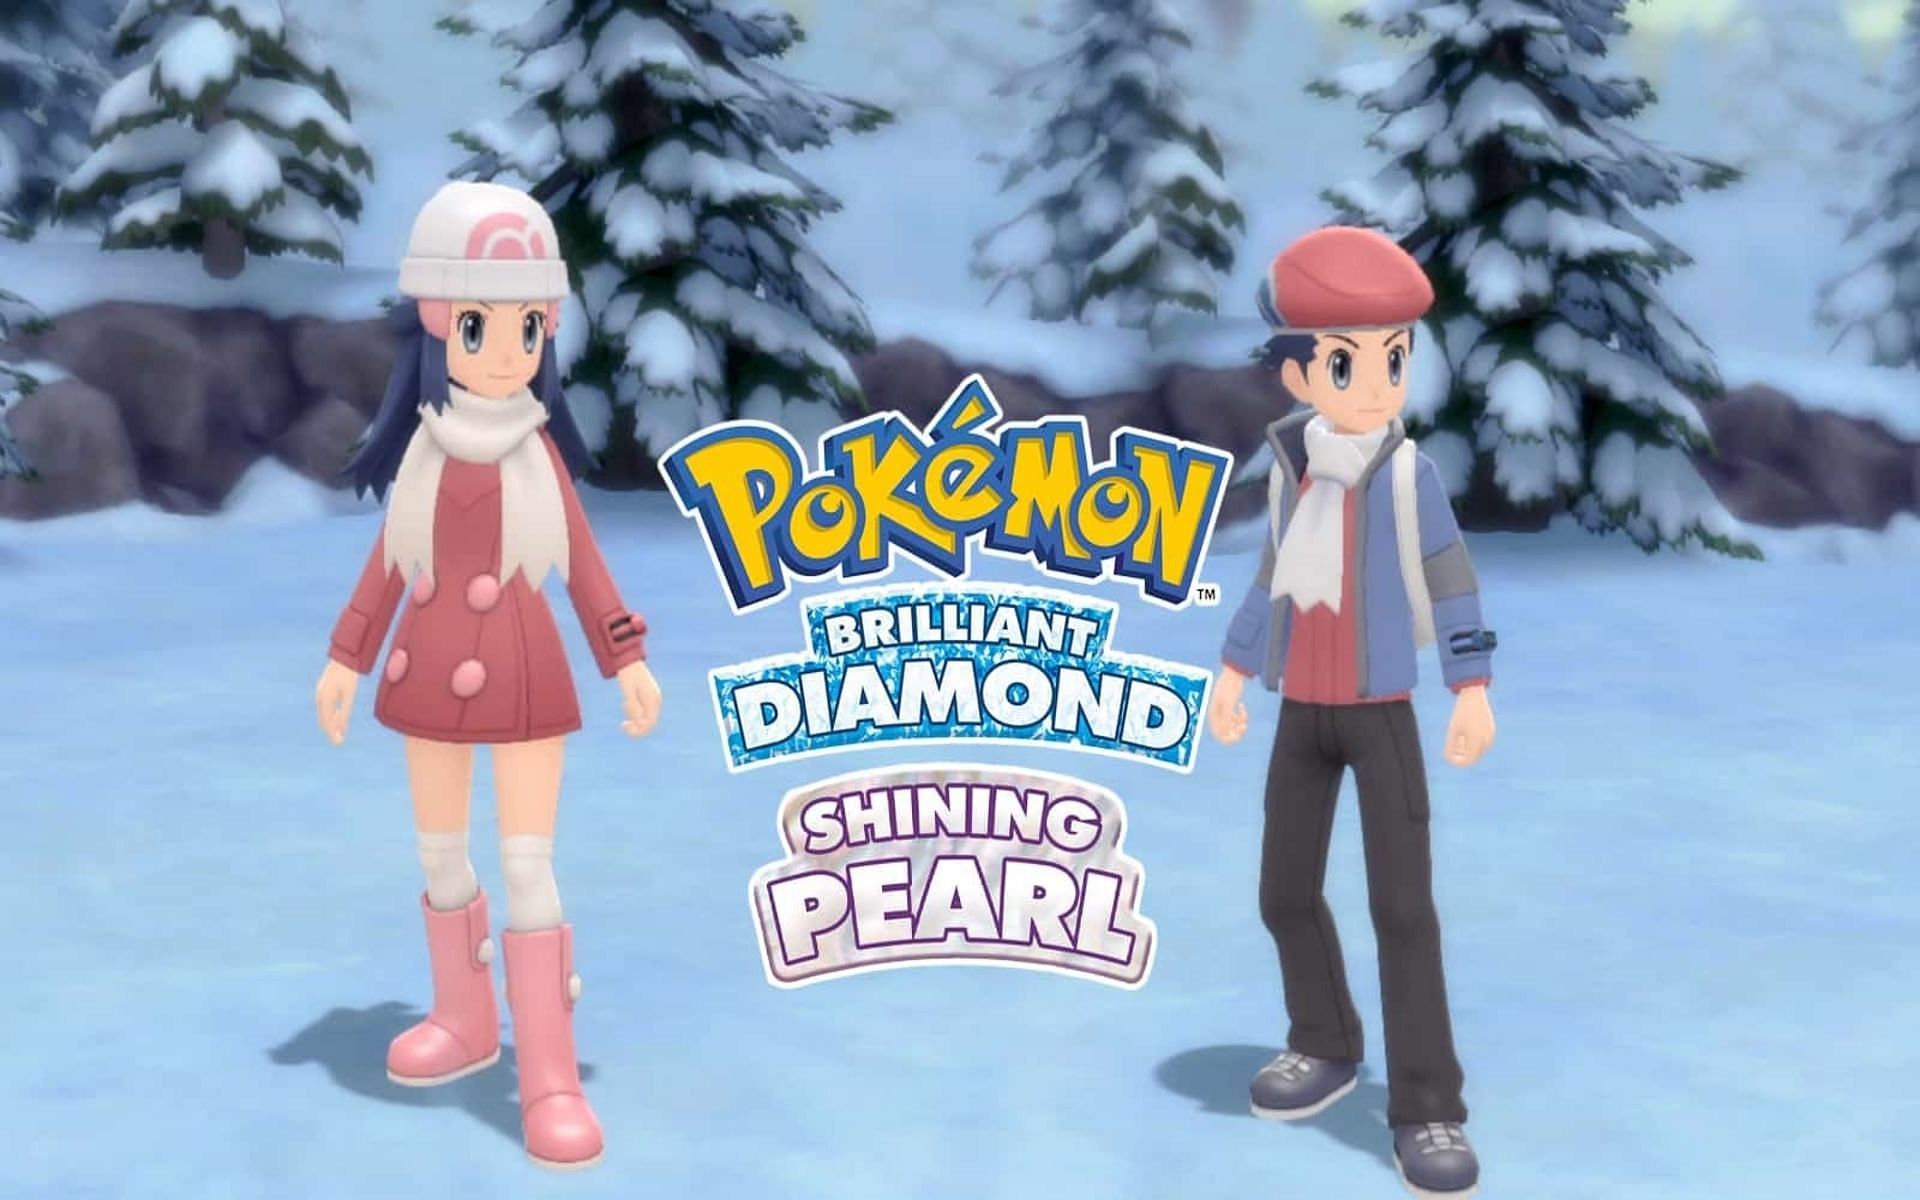 Pokemon Brilliant Diamond and Shining Pearl promise to be very faithful remakes (Image via The Pokemon Company)